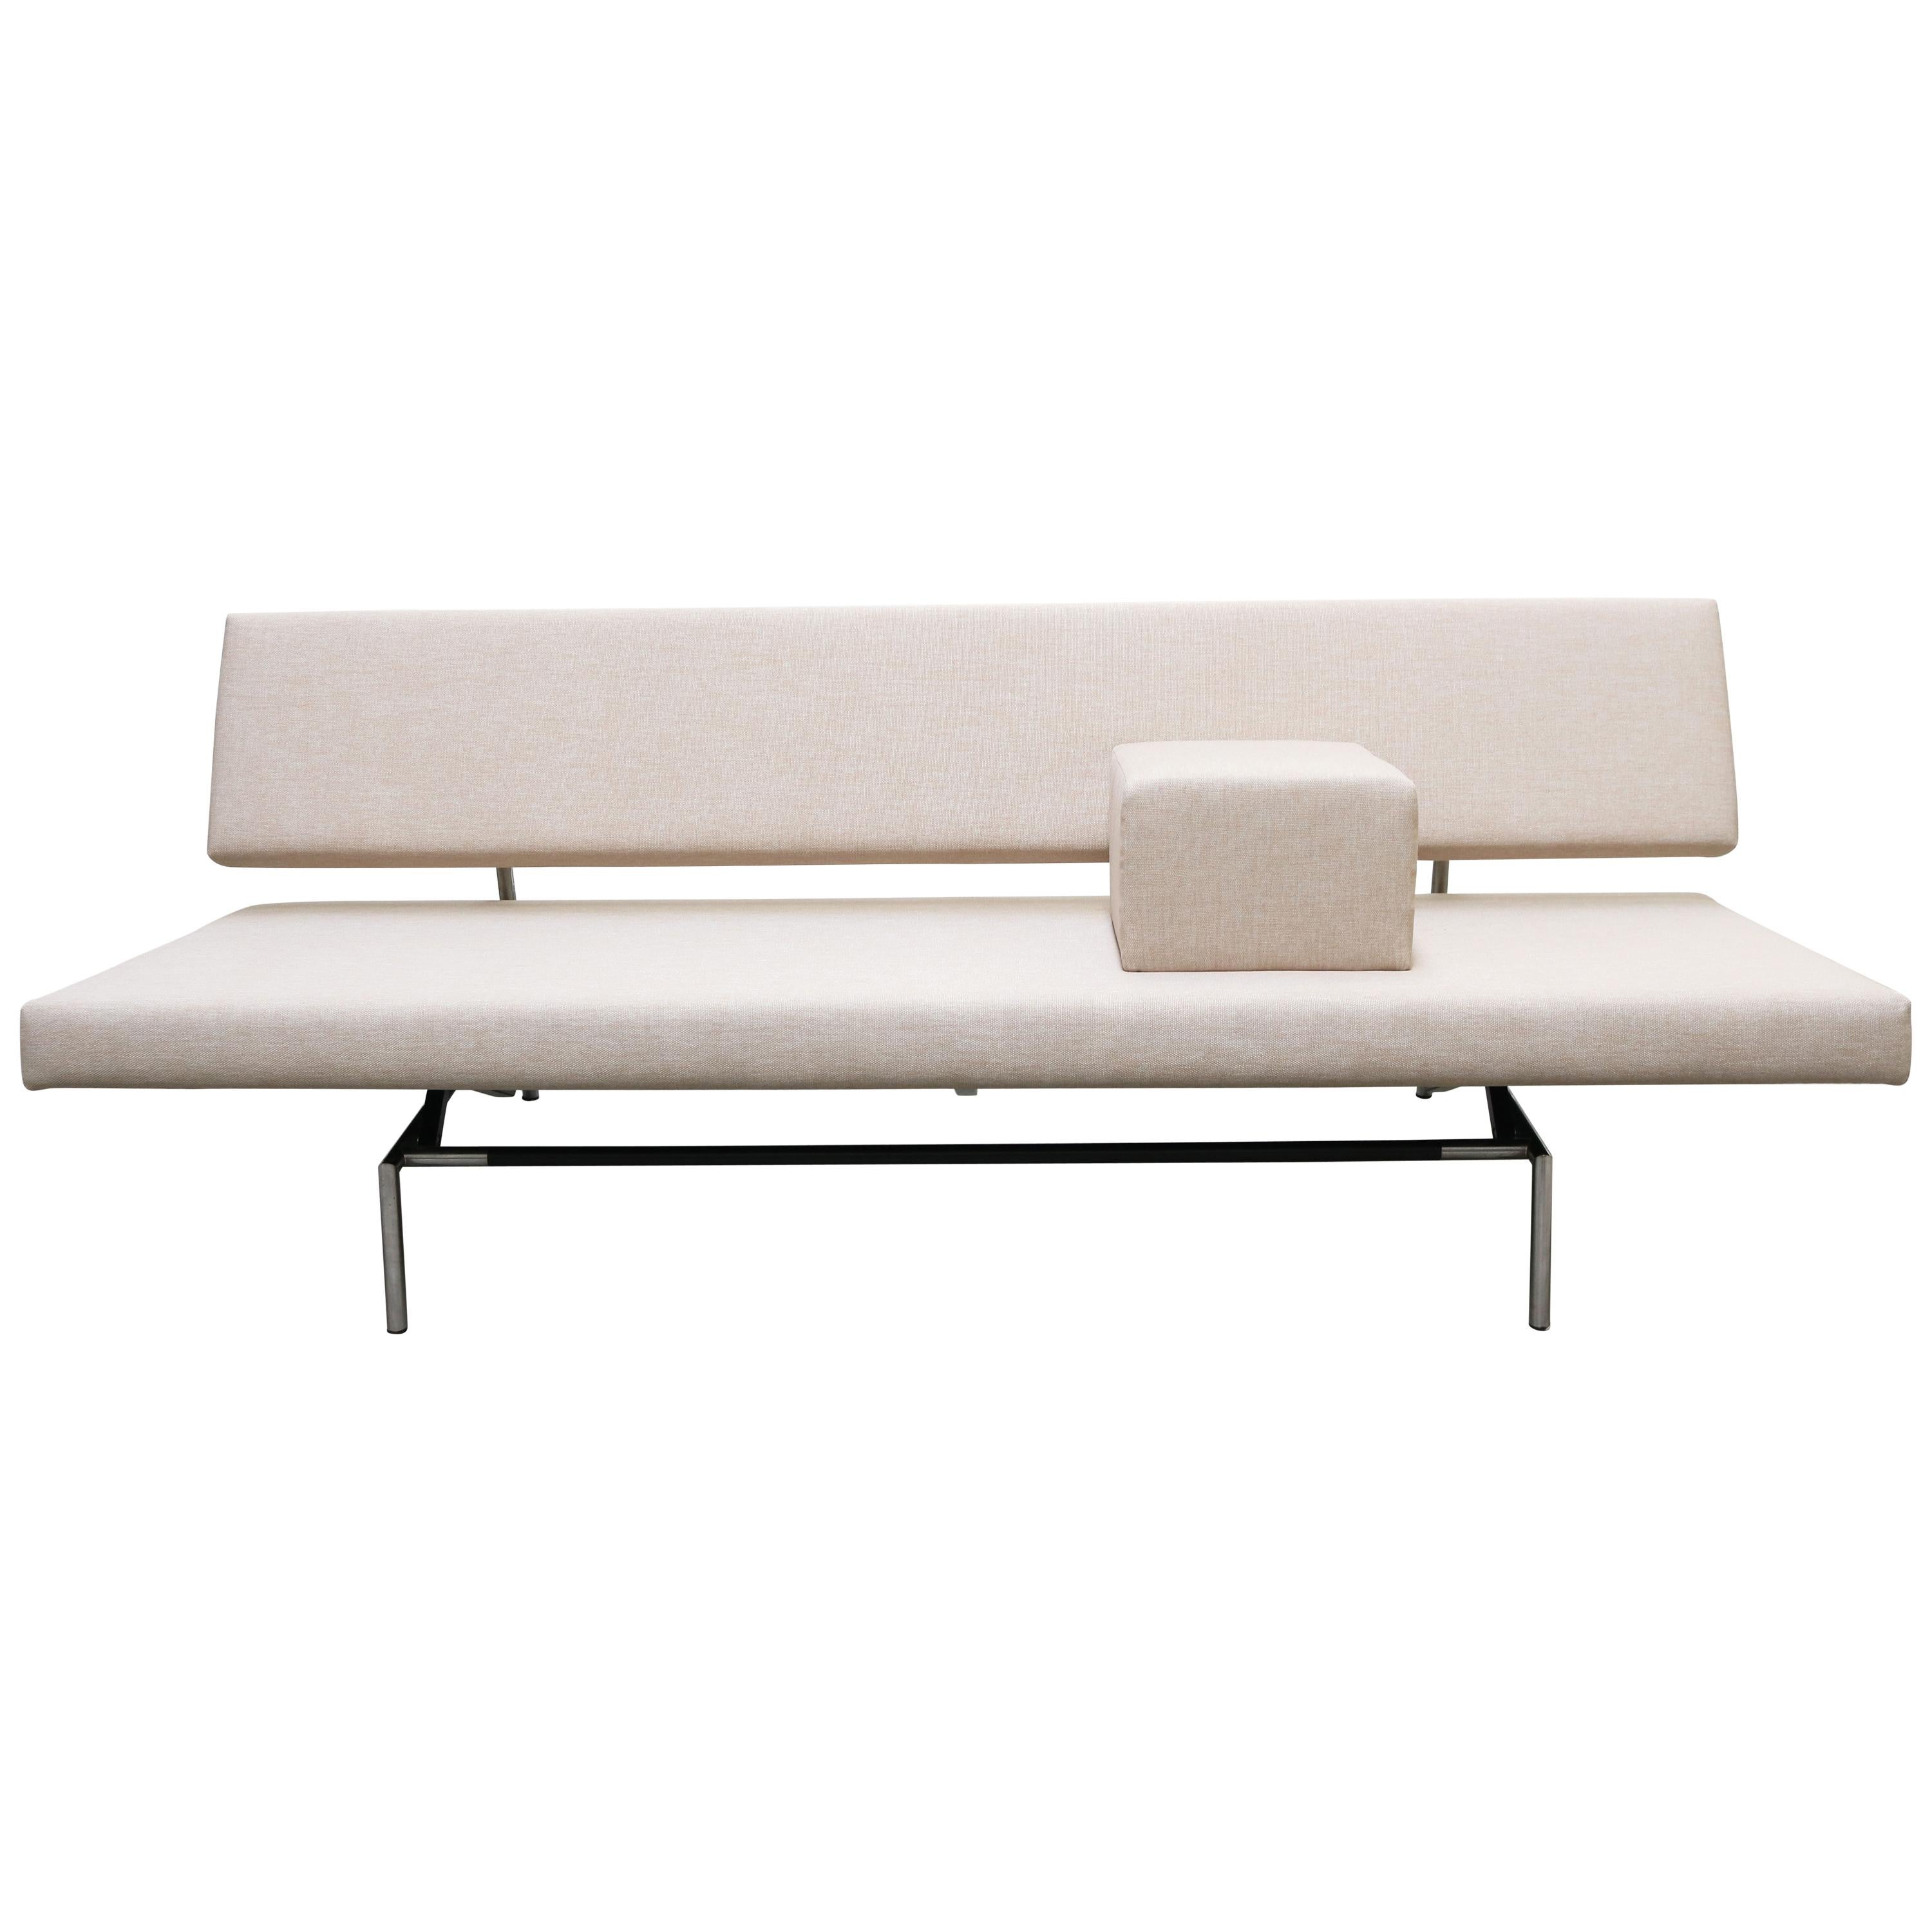 Dutch Design Sofa / Daybed BR02 by Martin Visser for Spectrum 1960s Grey Chrome